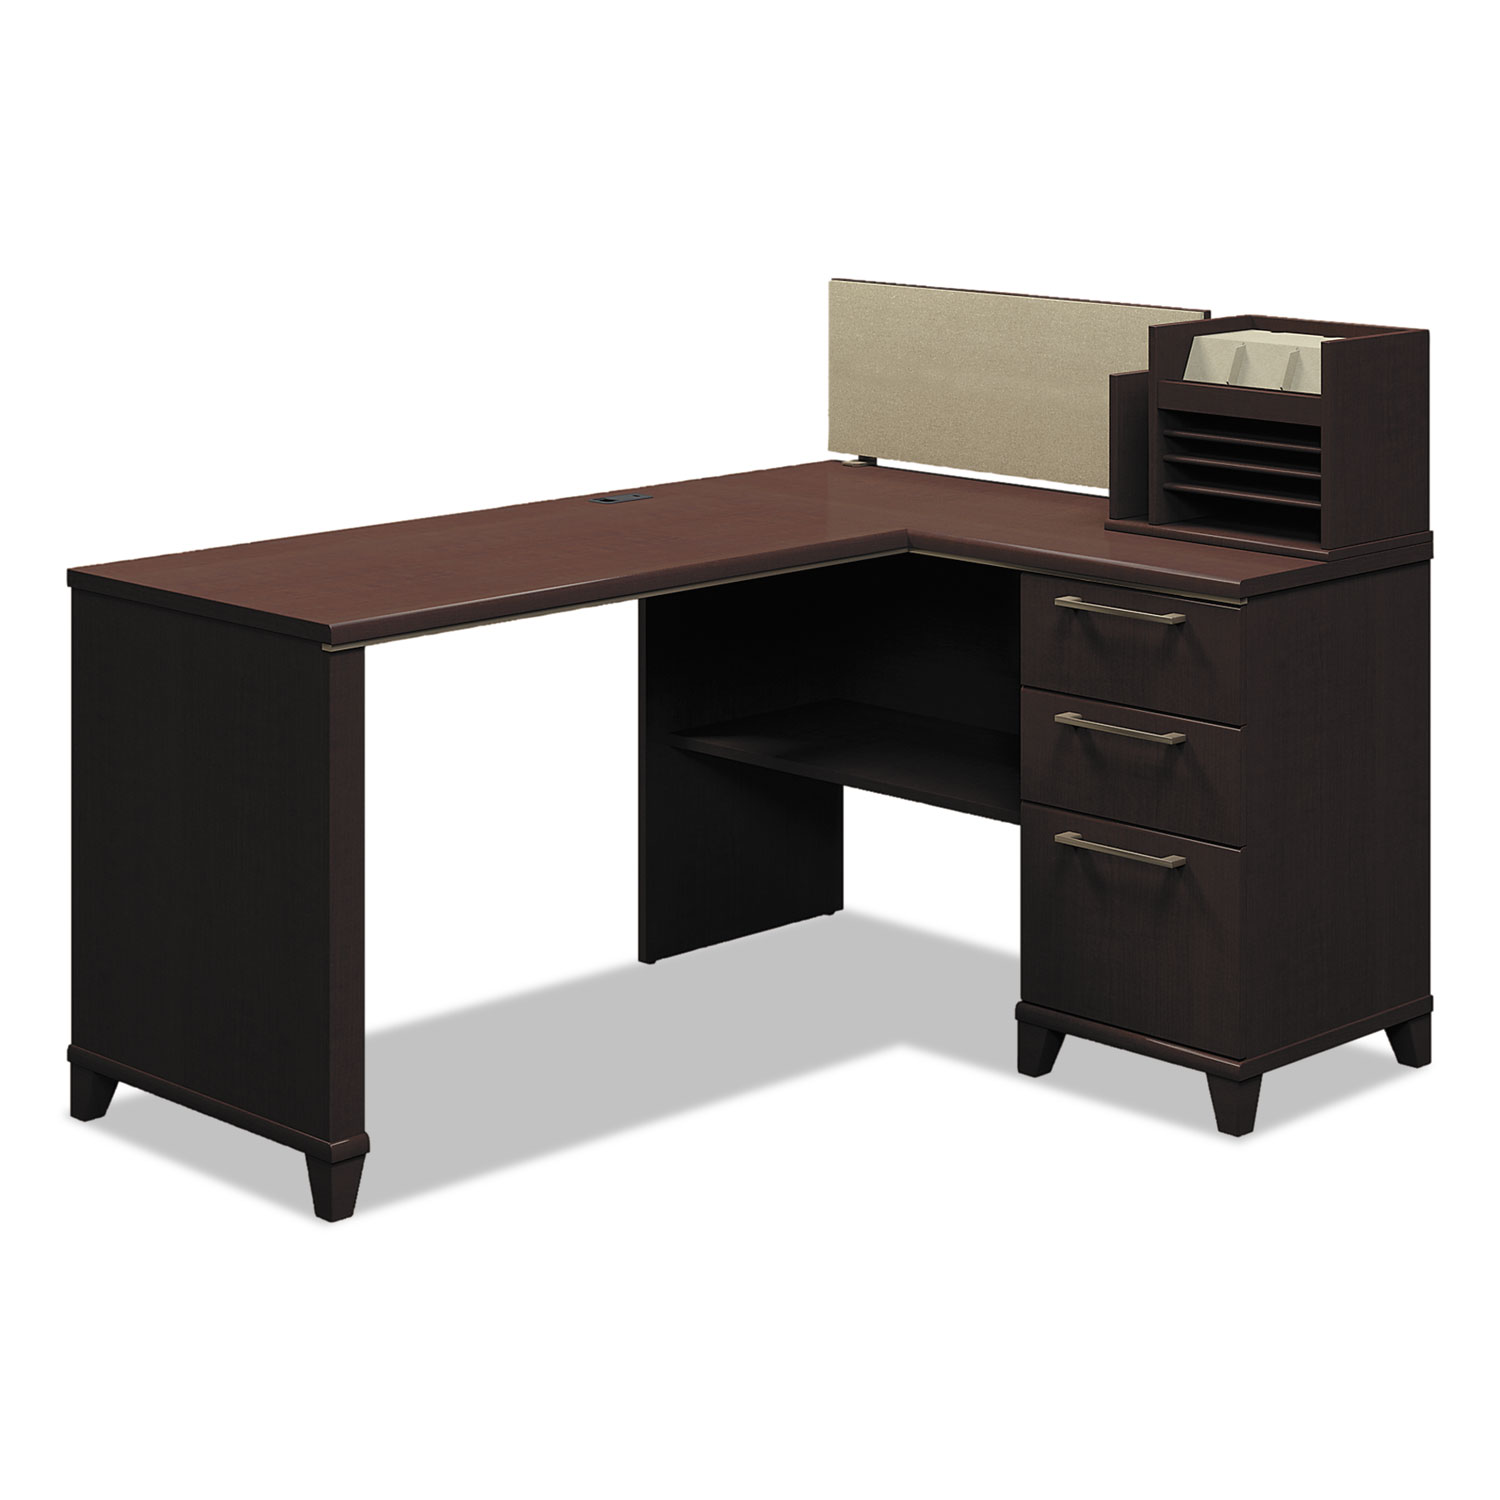 Enterprise Collection 60W x 47D Corner Desk, Mocha Cherry (Box 1 of 2)